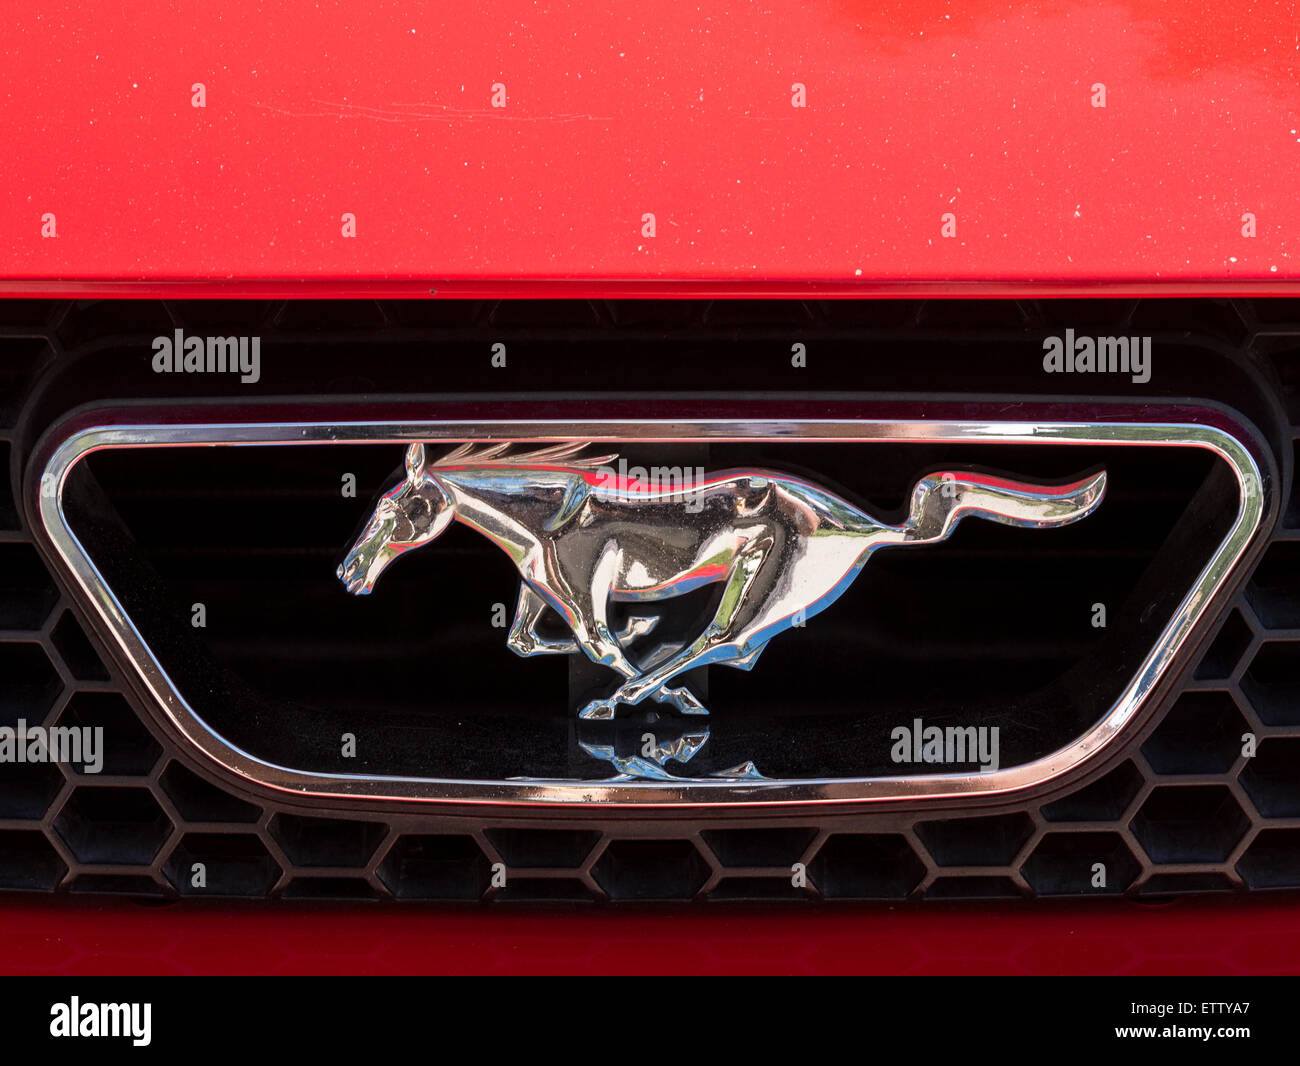 2000 Ford Mustang emblema, MG Coche Rallye, Glenwood Springs, Colorado. Foto de stock